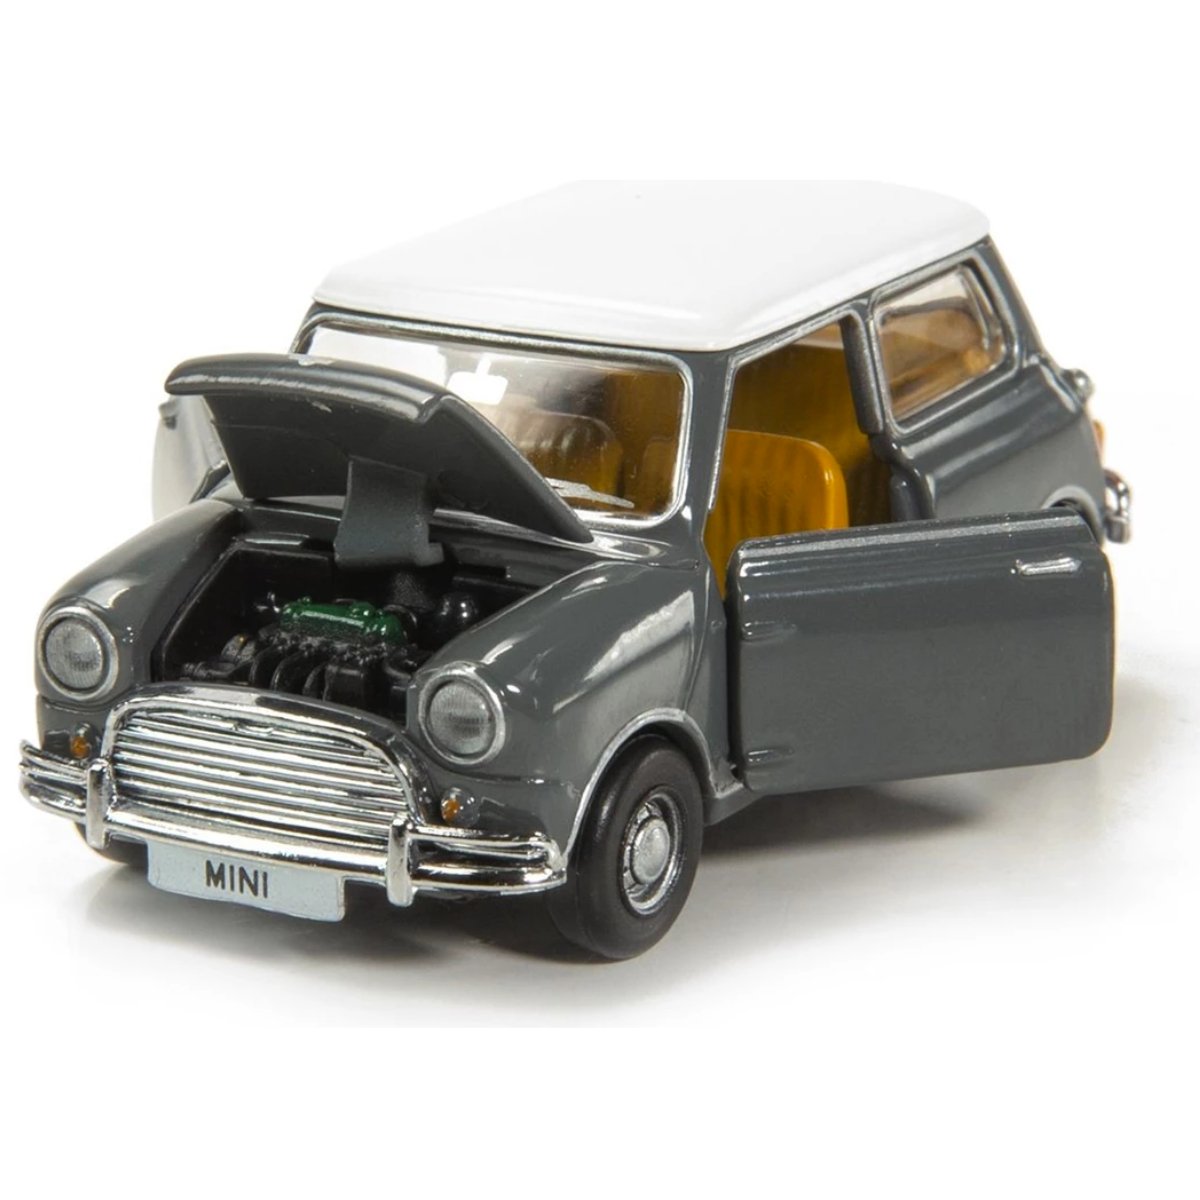 Tiny Models Mini Cooper MK1 425C (1:50 Scale) - Phillips Hobbies